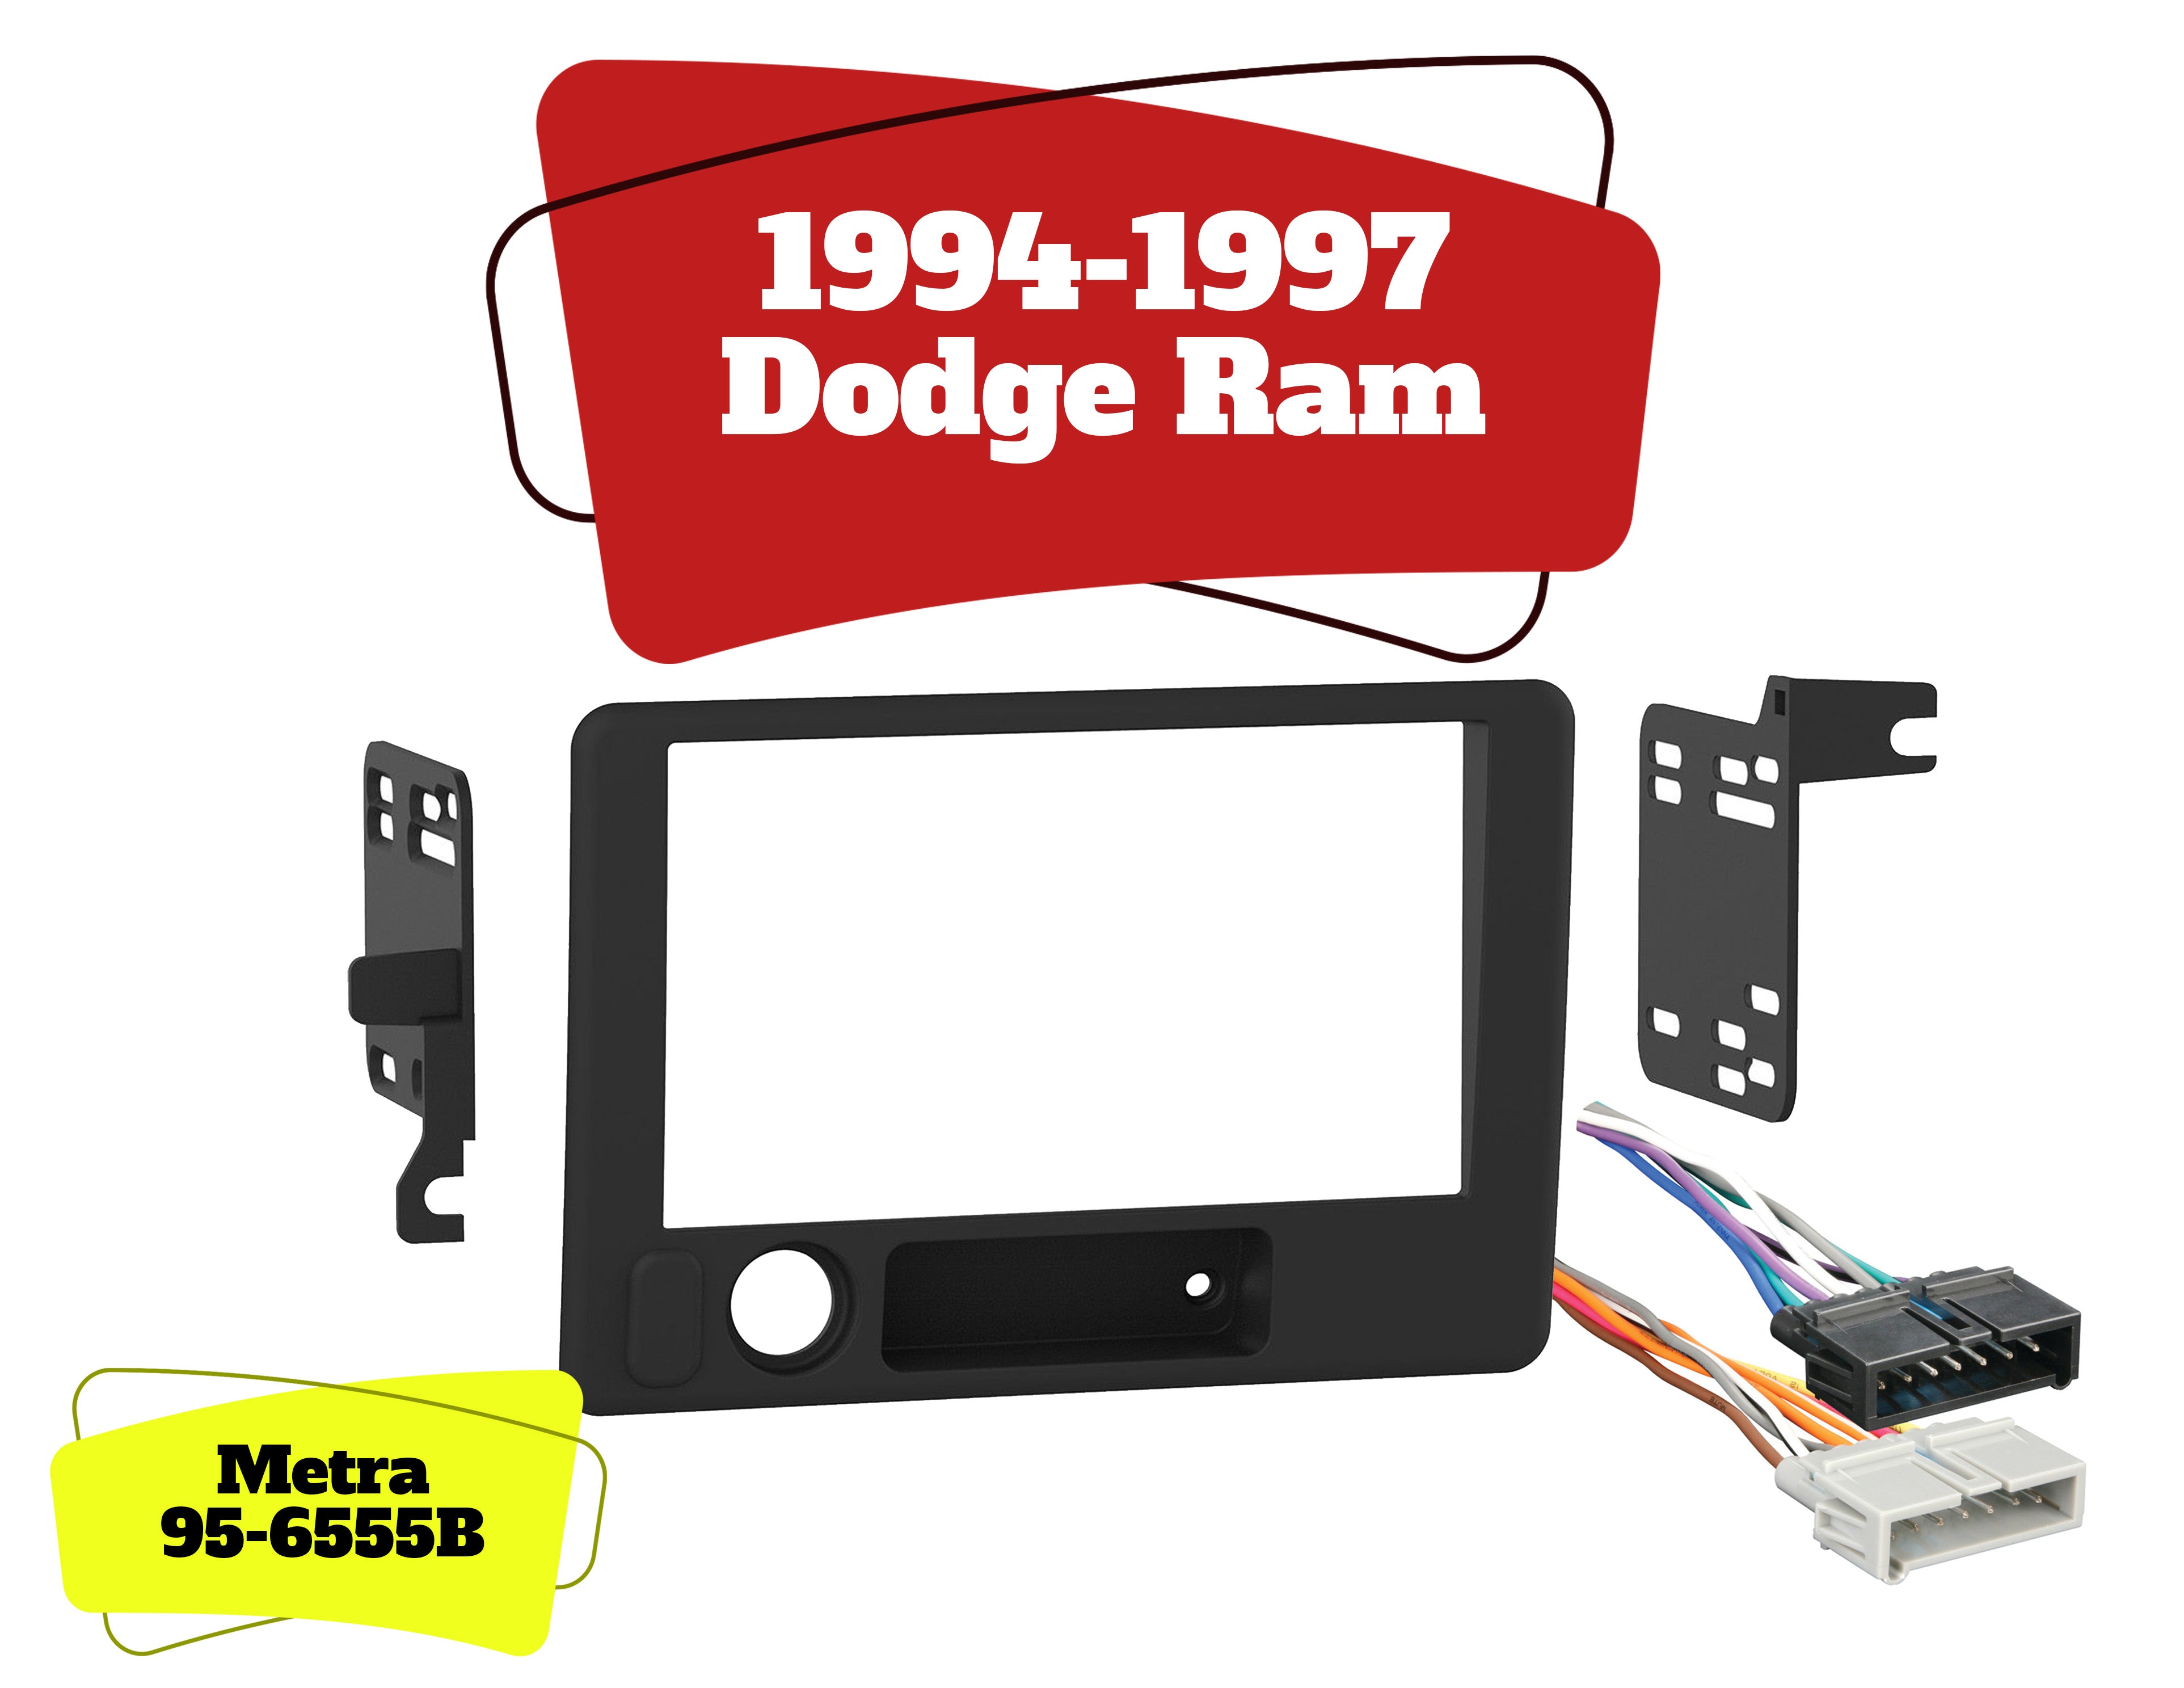 Metra 95-6555B 94-97 Dodge Ram Double Din Car Radio Stereo Installation Dash Kit & 70-1817 Wiring Harness